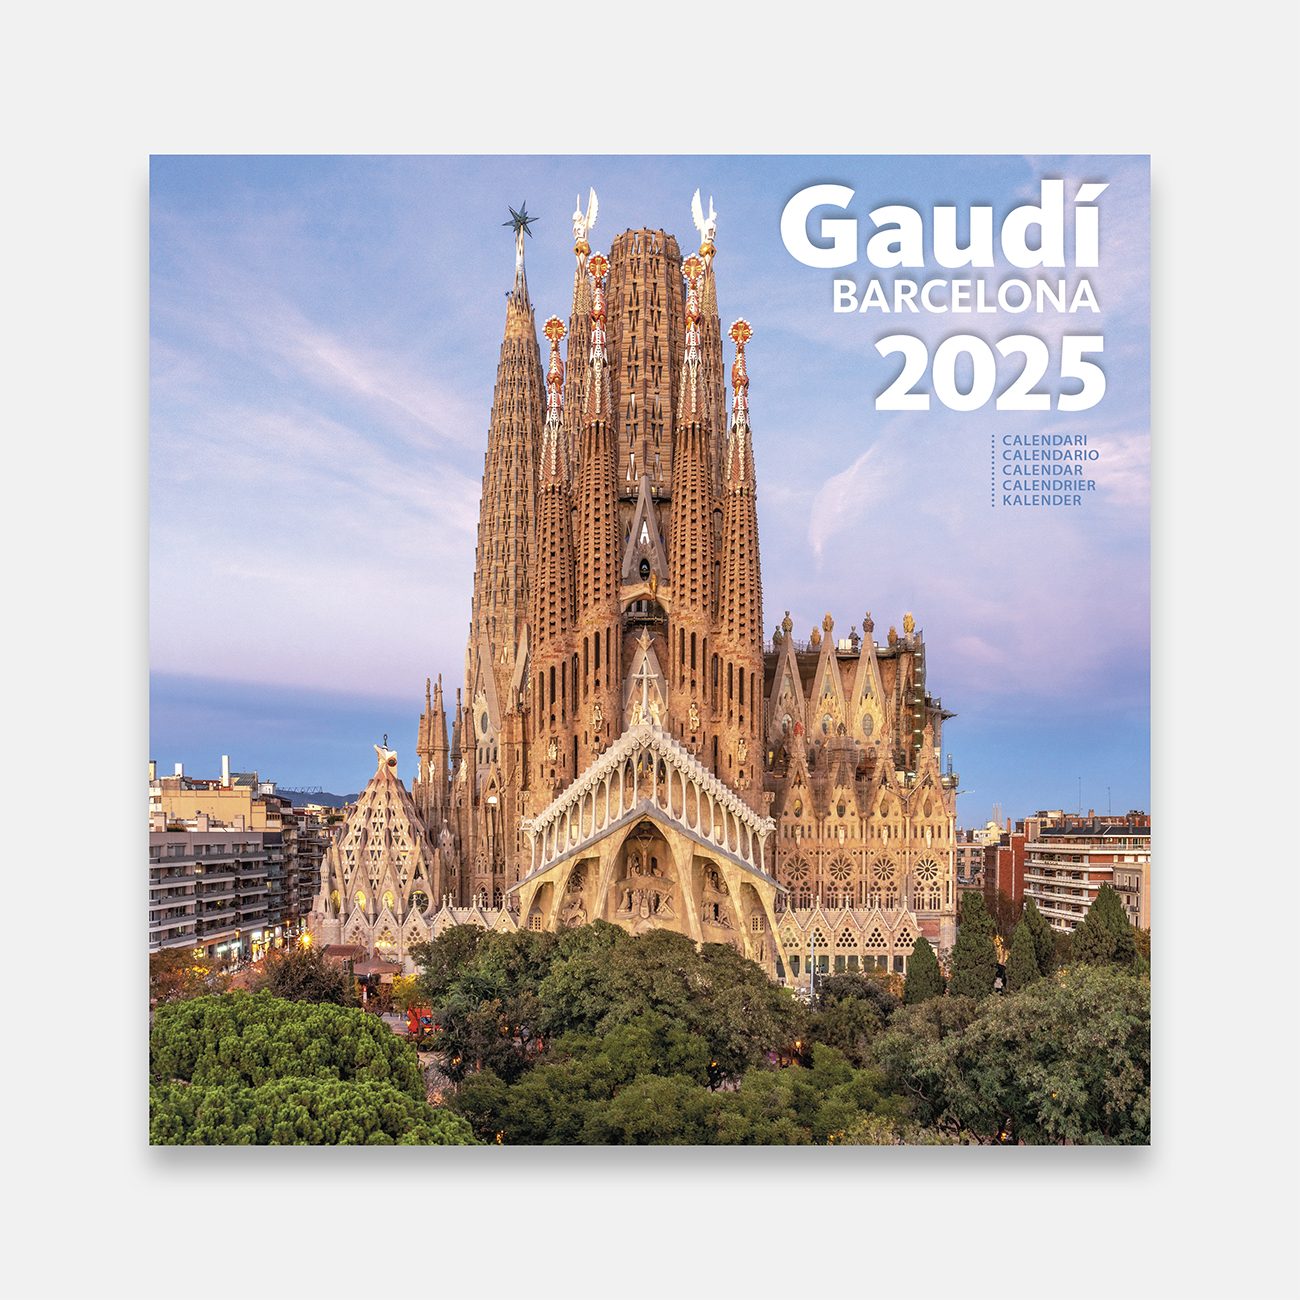 Calendario 2025 Gaudí (Sagrada Família) 25g1 b calendario pared 2025 gaudi sagrada familia